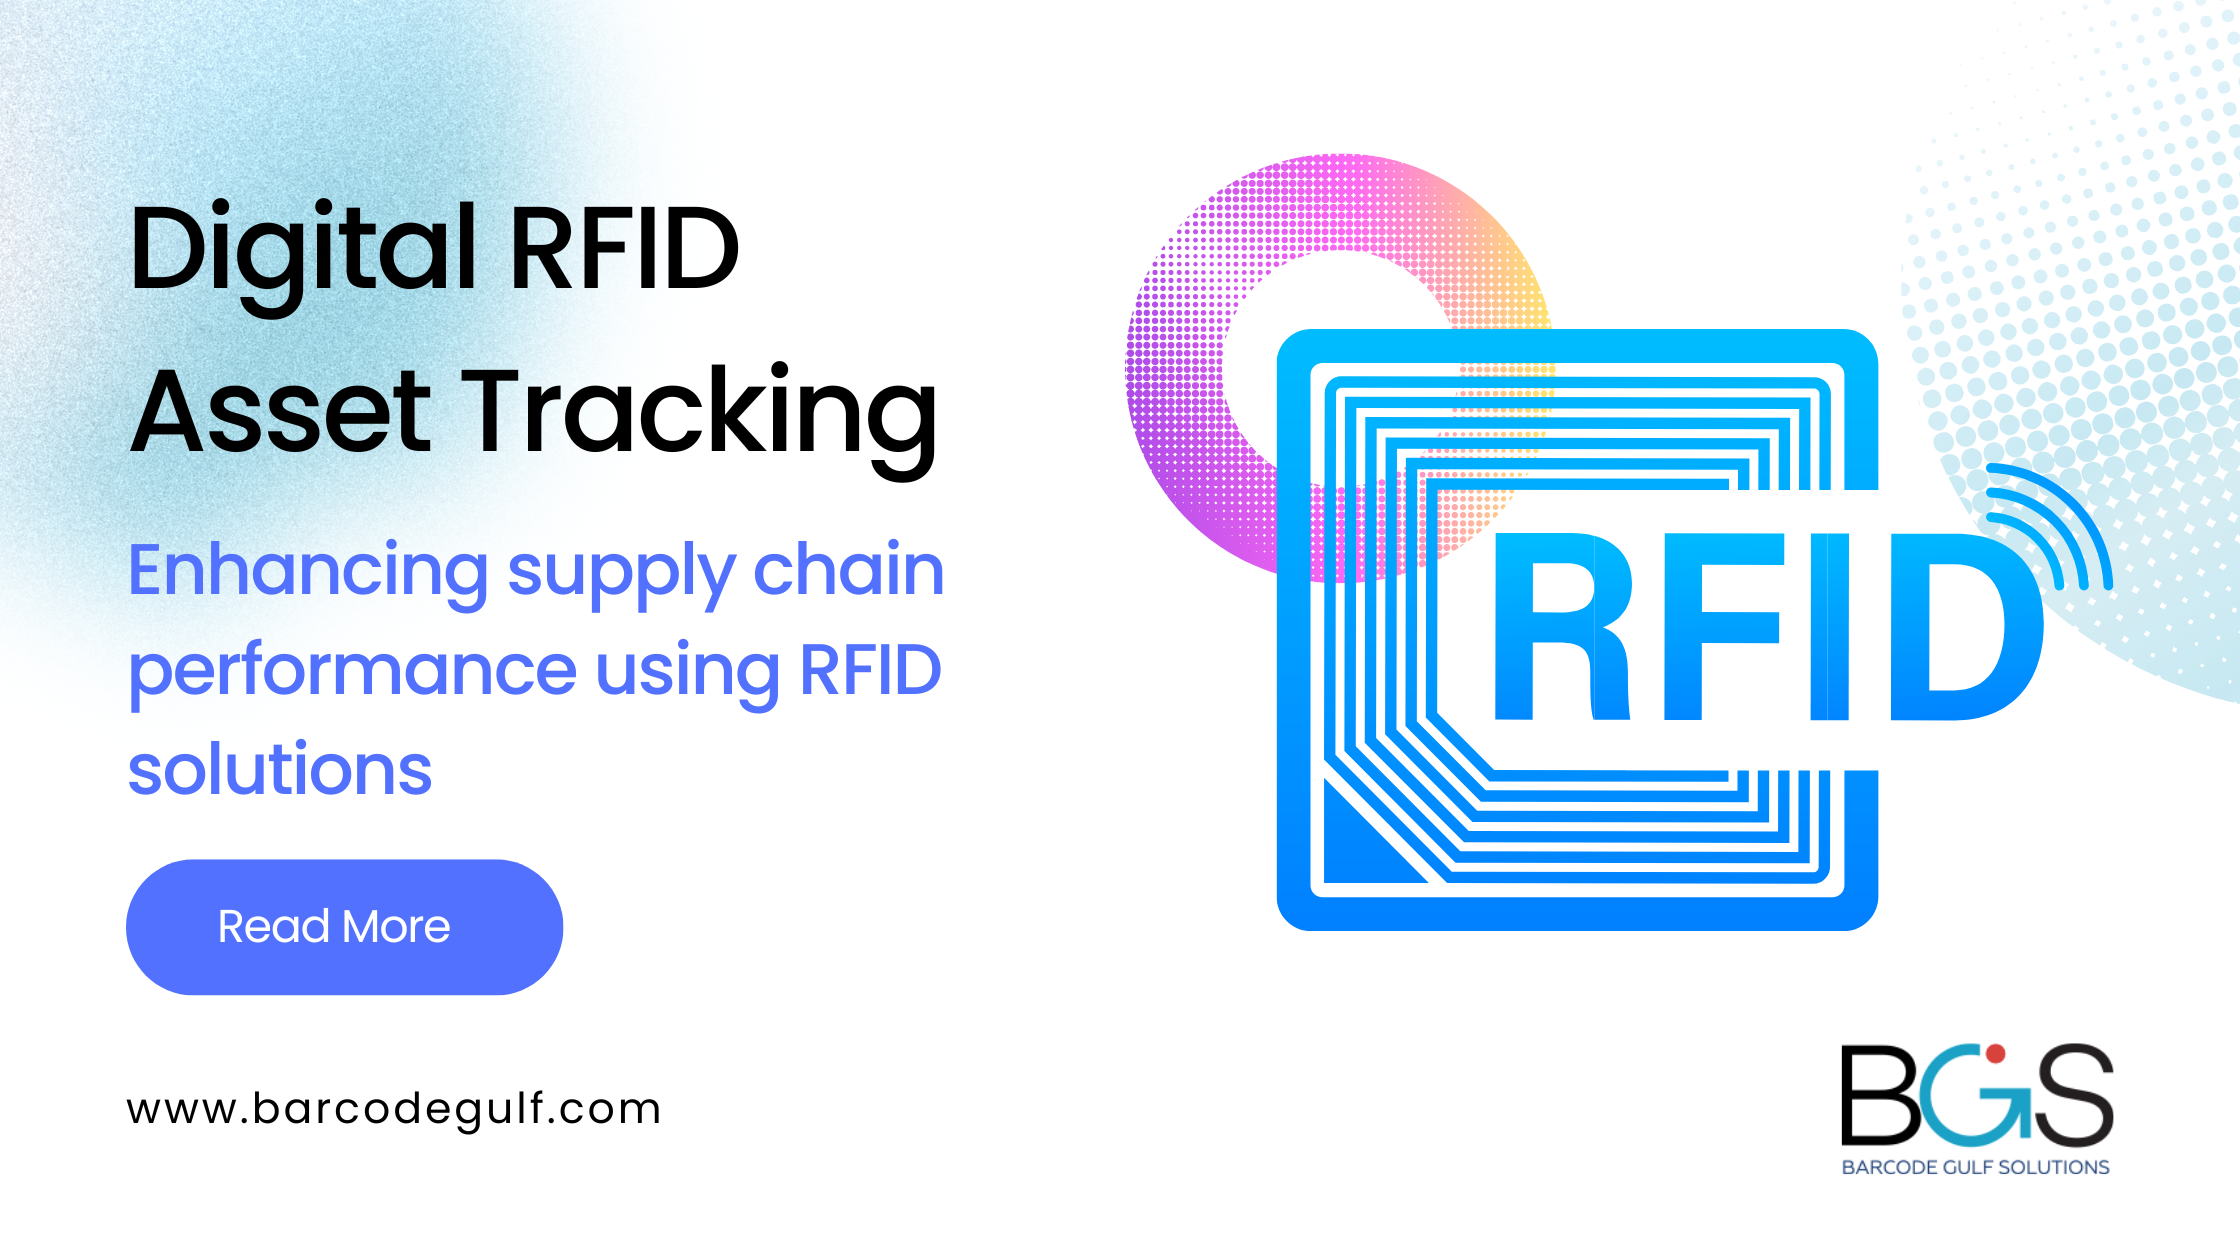 Barcodegulf - Digital RFID Asset Tracking Enhancing Supply Chain Performance Using RFID Solutions